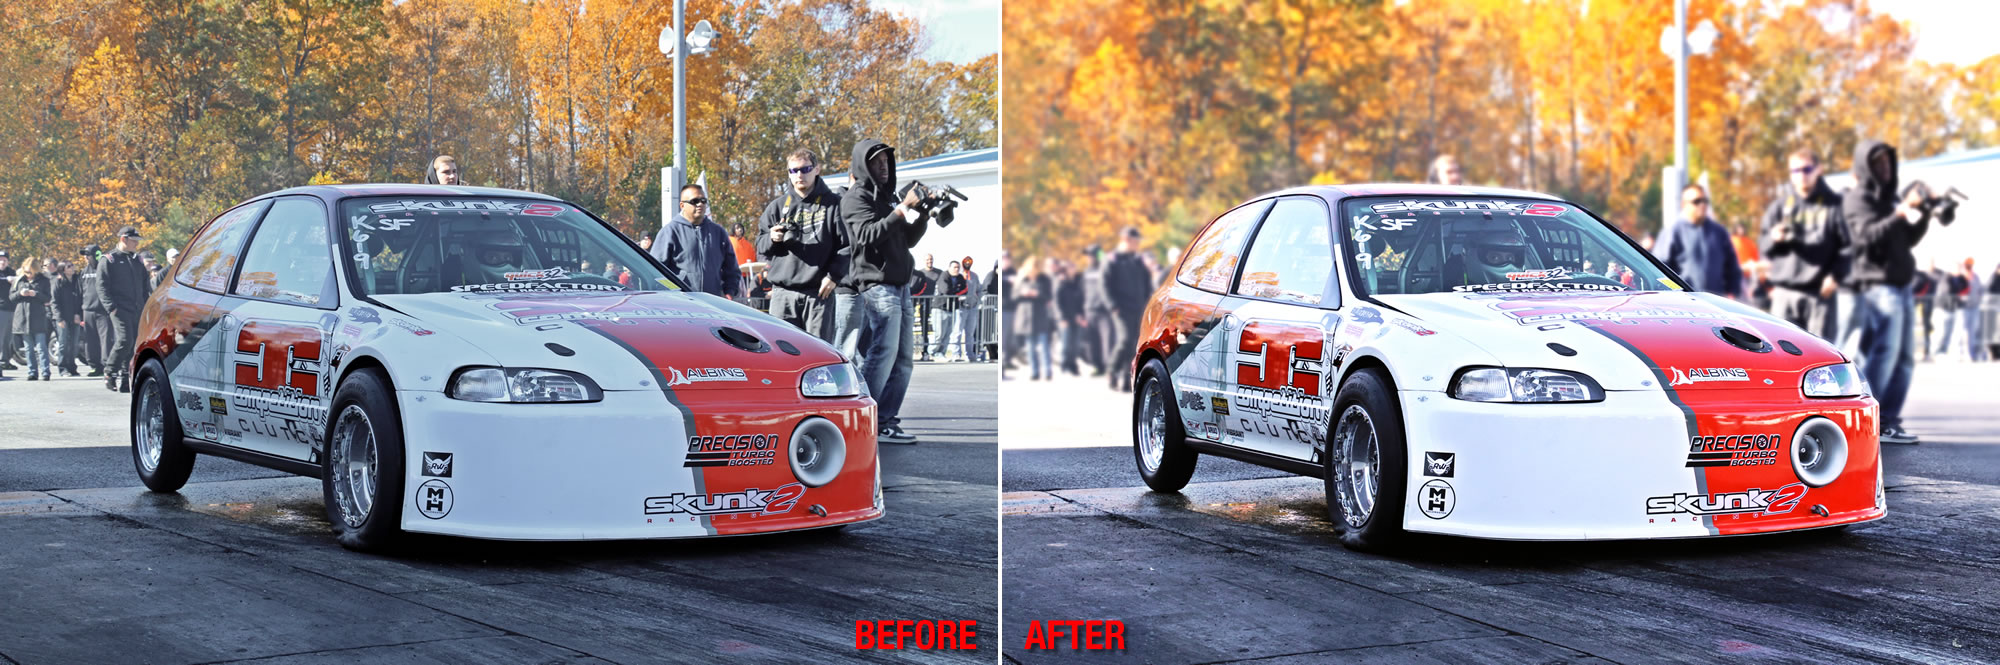 Digital Retouching: Color correction/adjustment, focal emphasis, etc. (before & after)